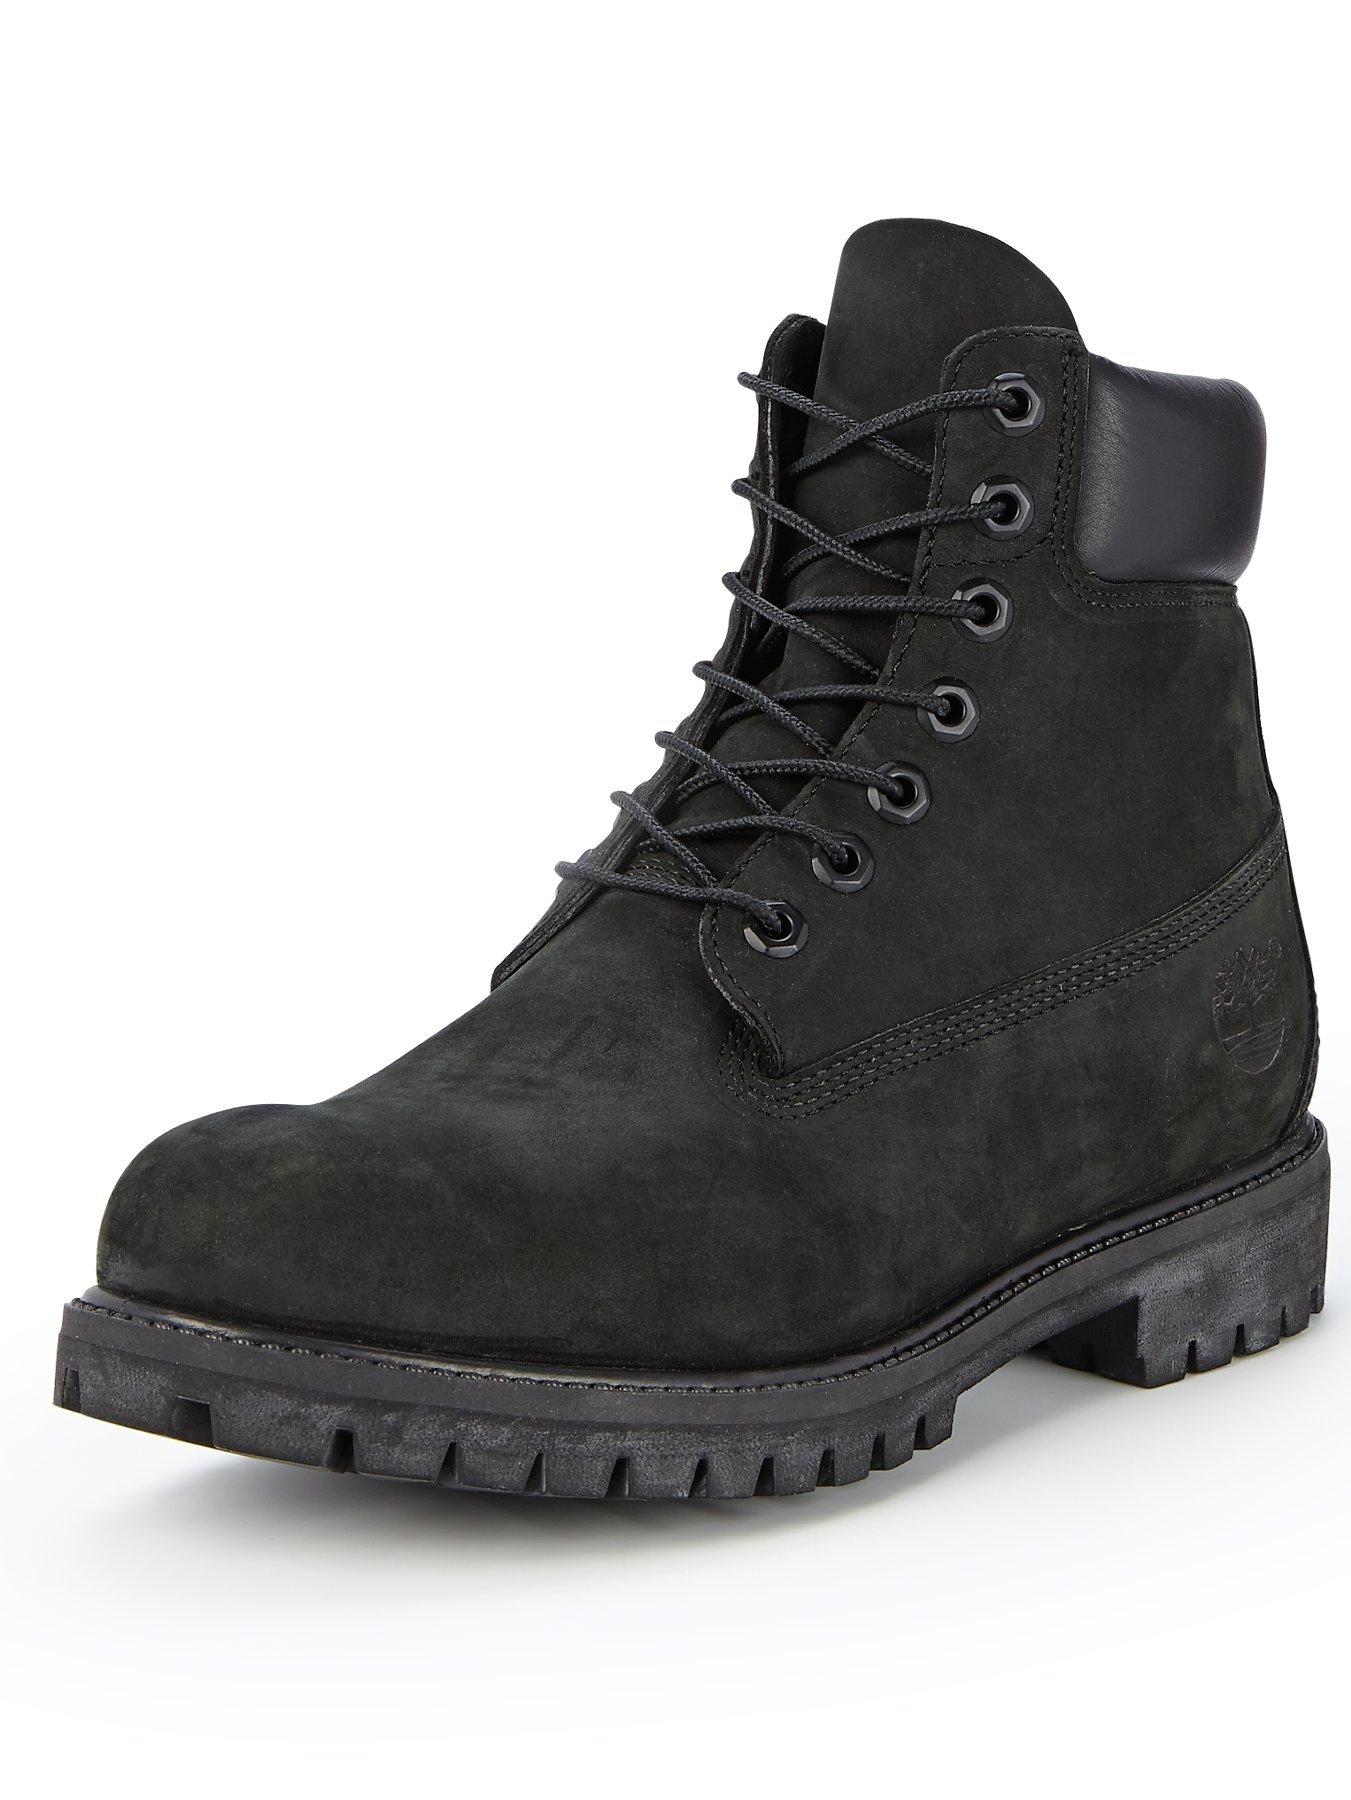 Timberland Premium 6 Inch Boots - Black 